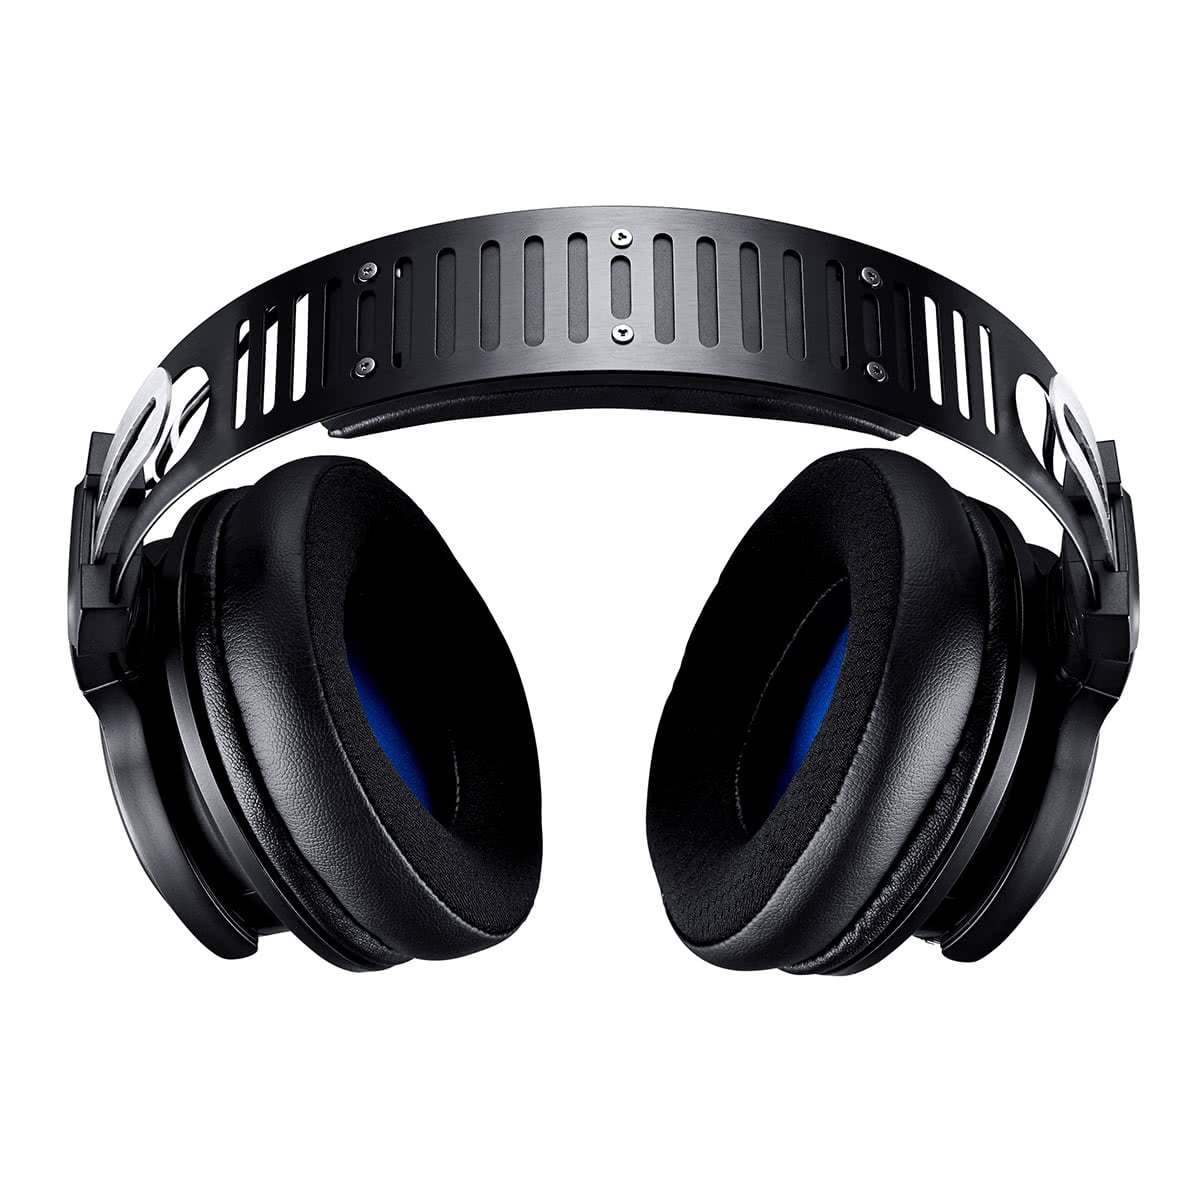 AudioTechnica ATH-G1 Premium Gaming Headset